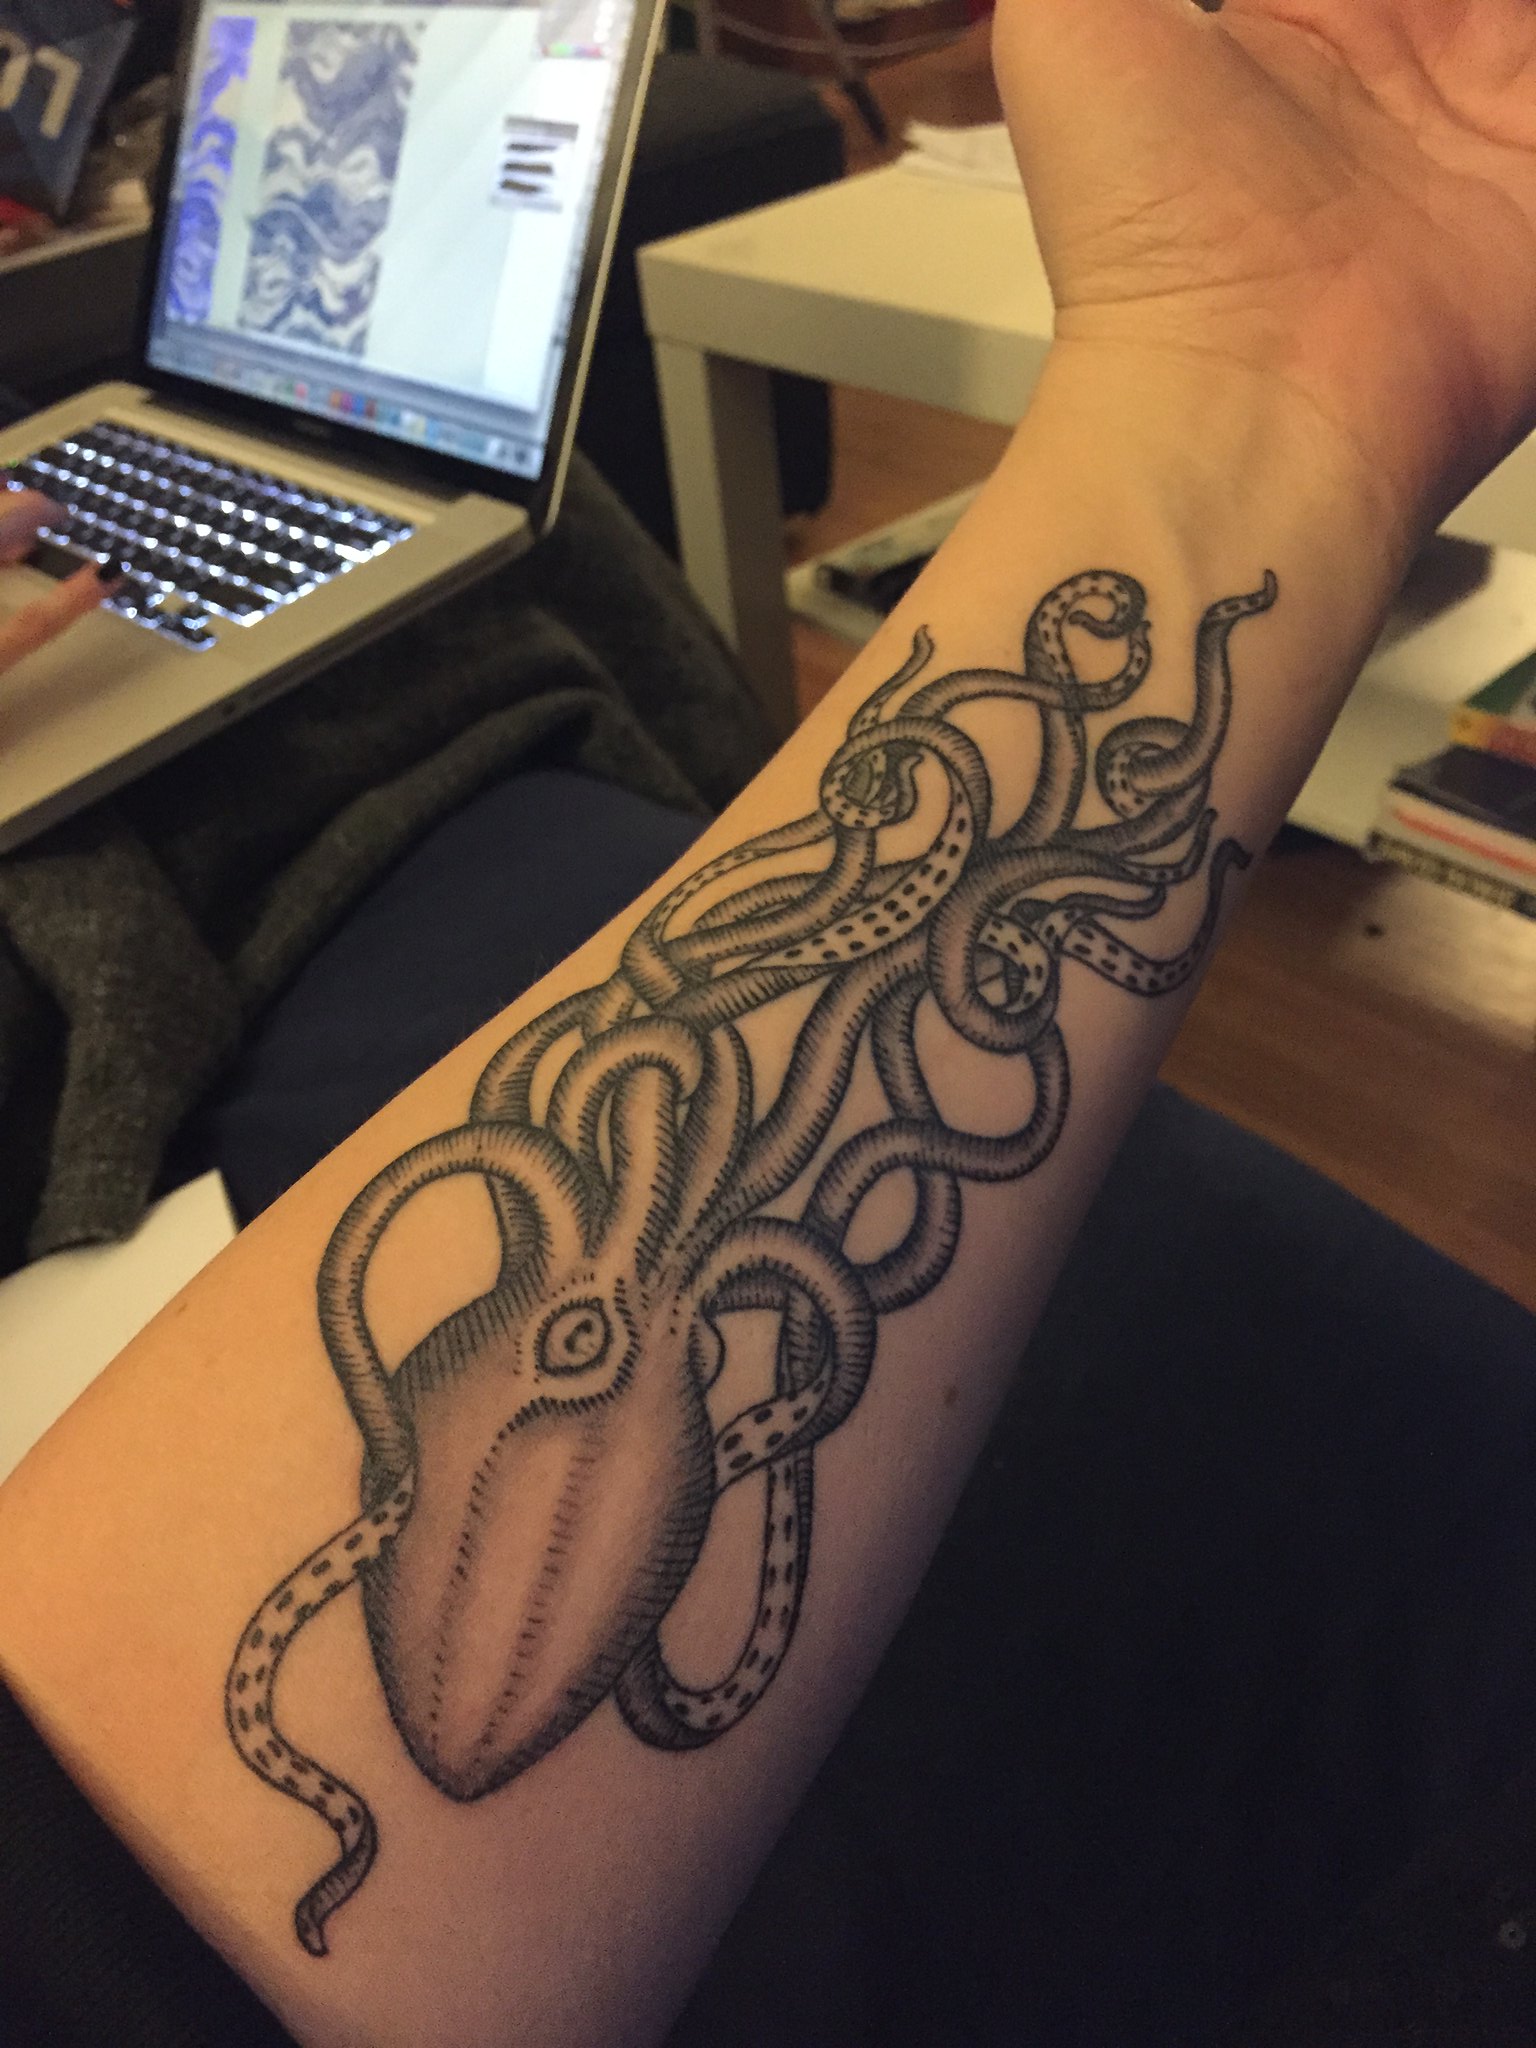 virginia jones octopus tattoo by amy nicoletto